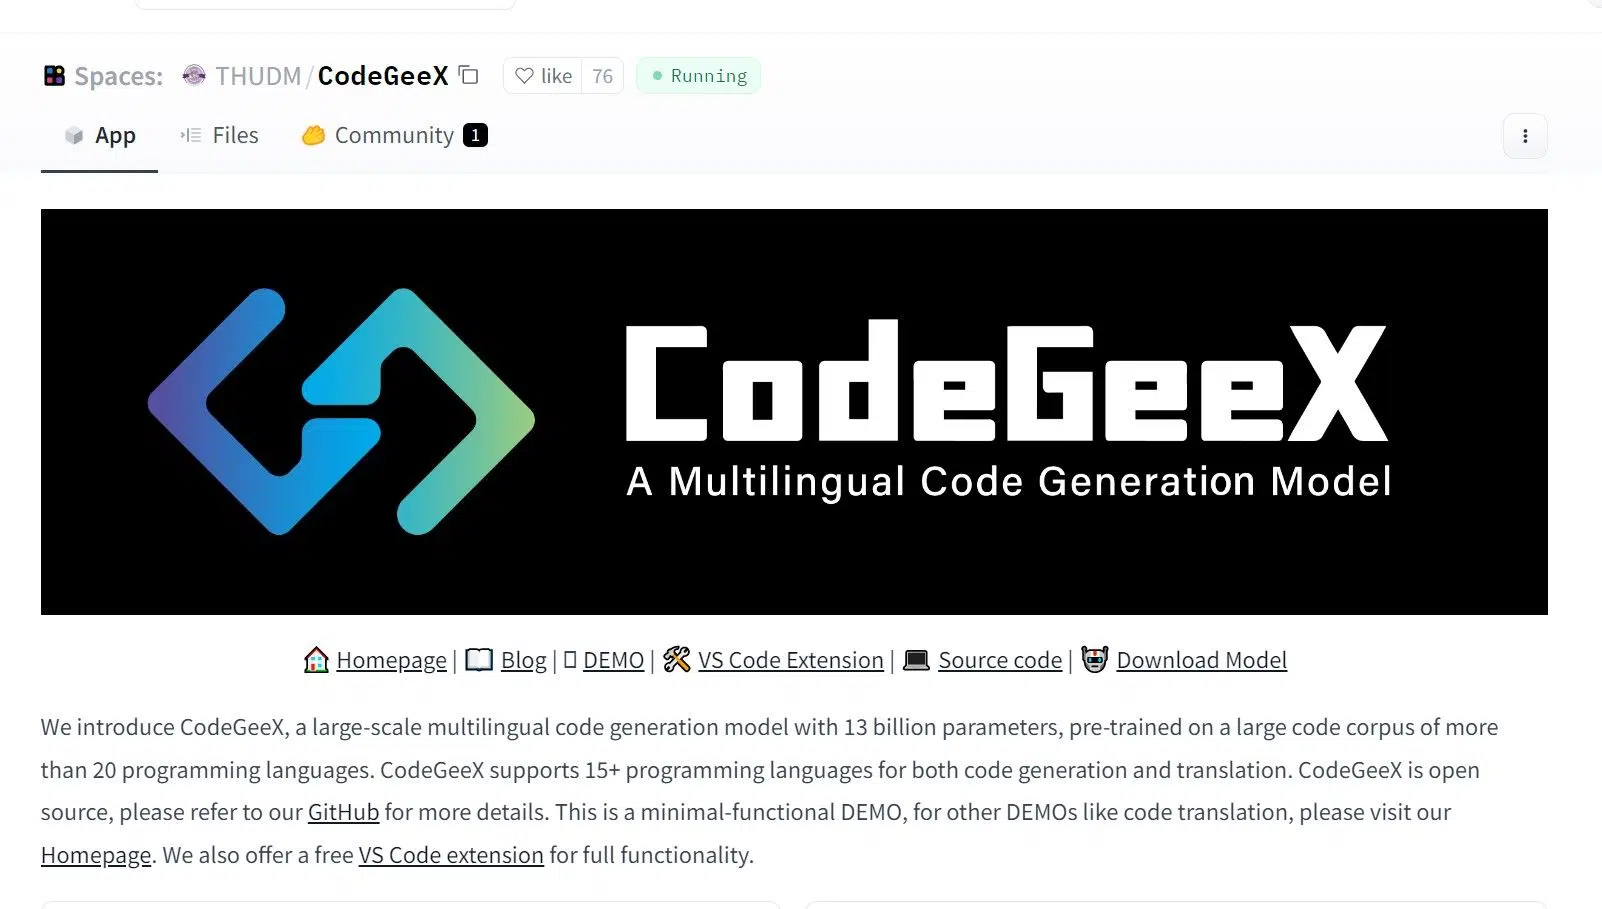 CodeGeeXwebsite picture